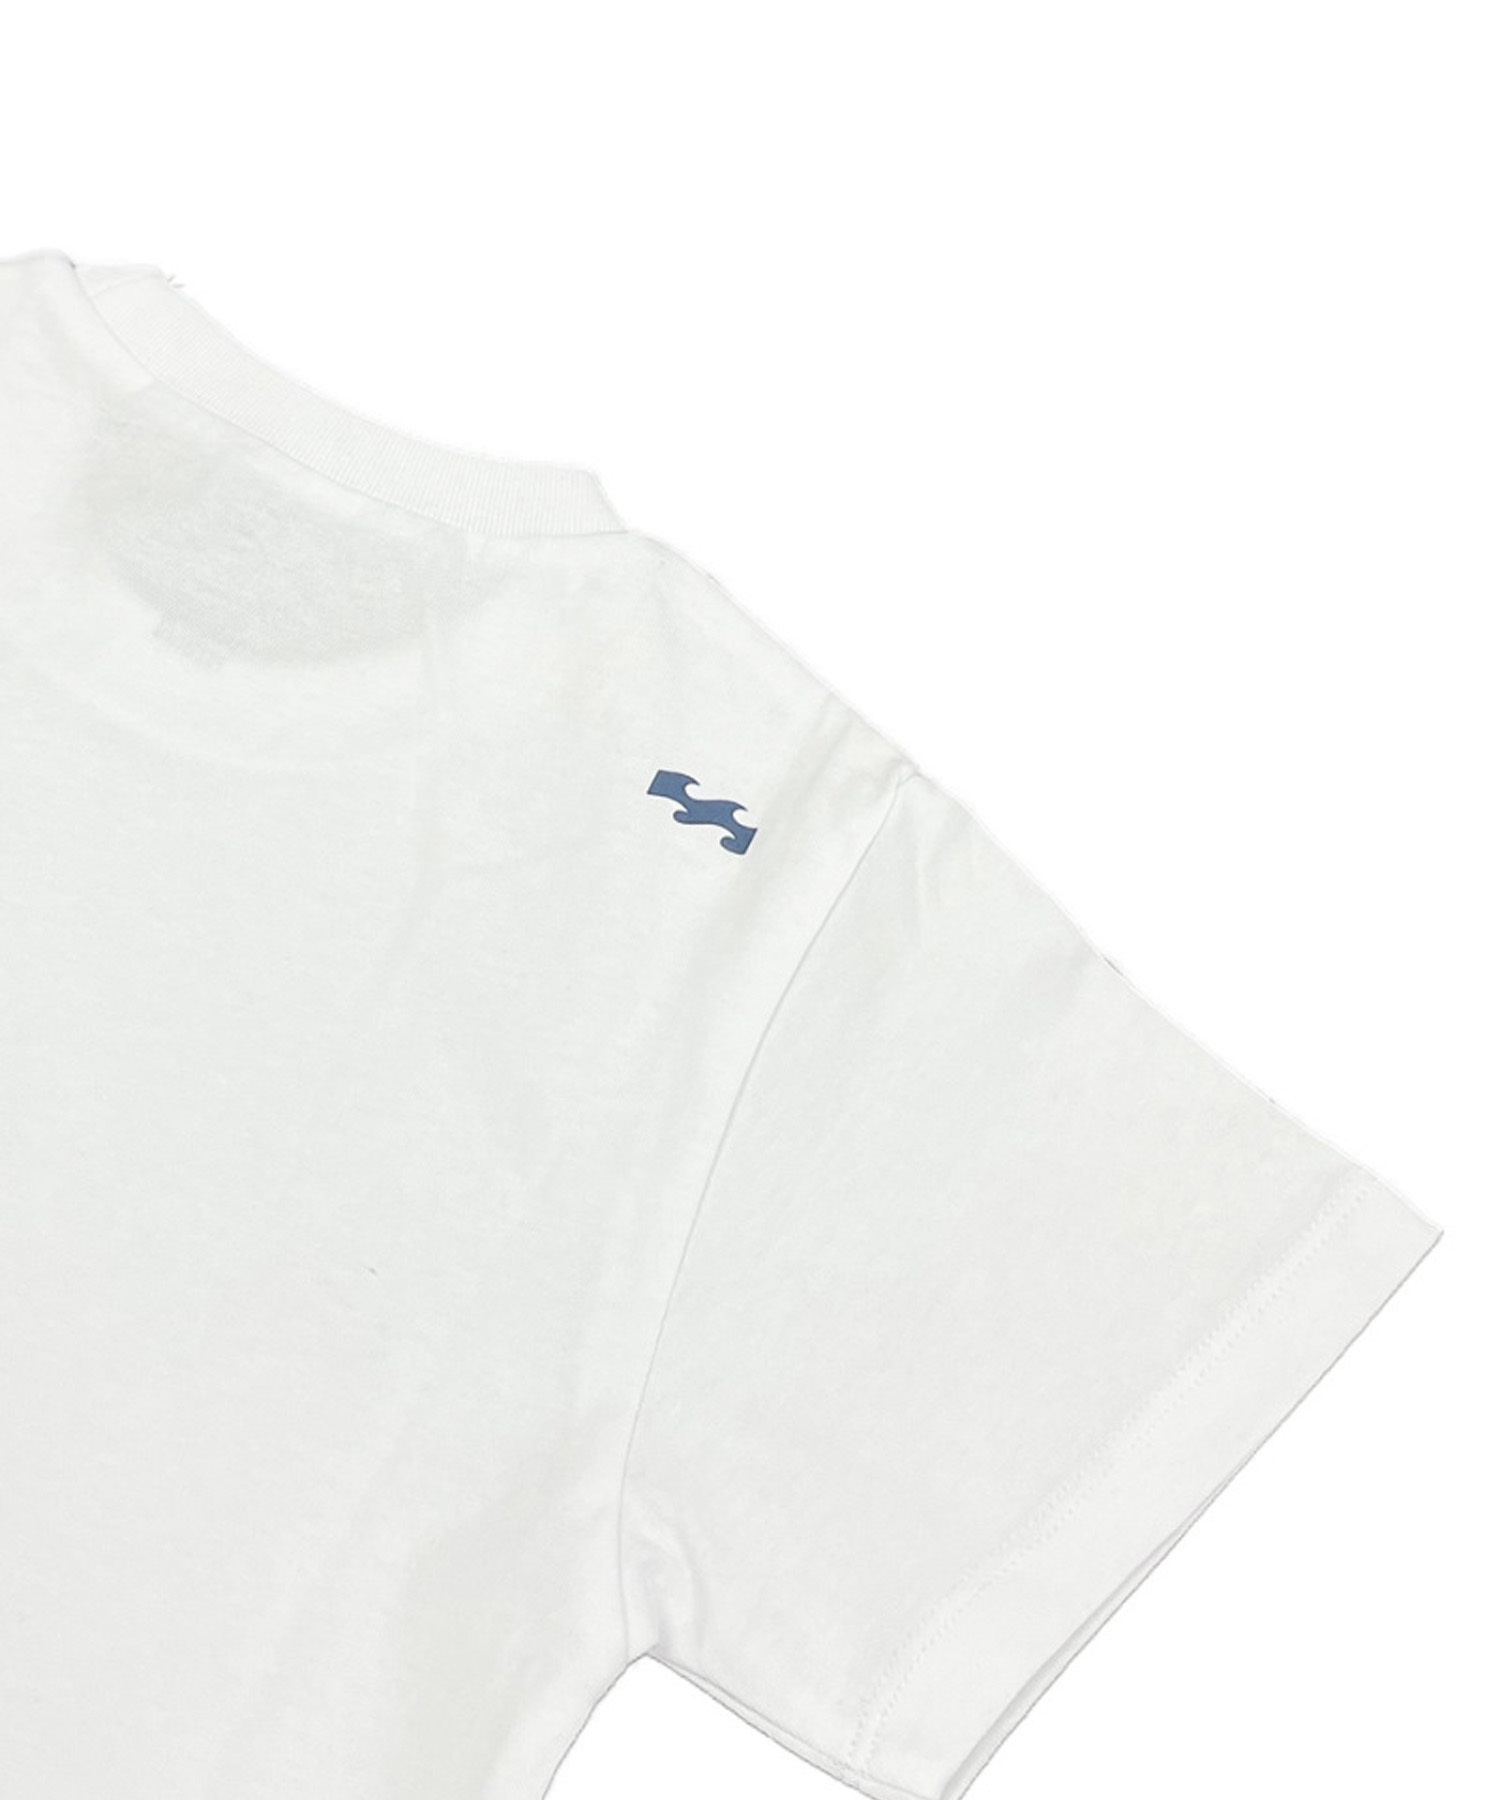 BILLABONG ビラボン UNITY LOGO キッズ 半袖 Tシャツ BE015-204(WHT-90cm)